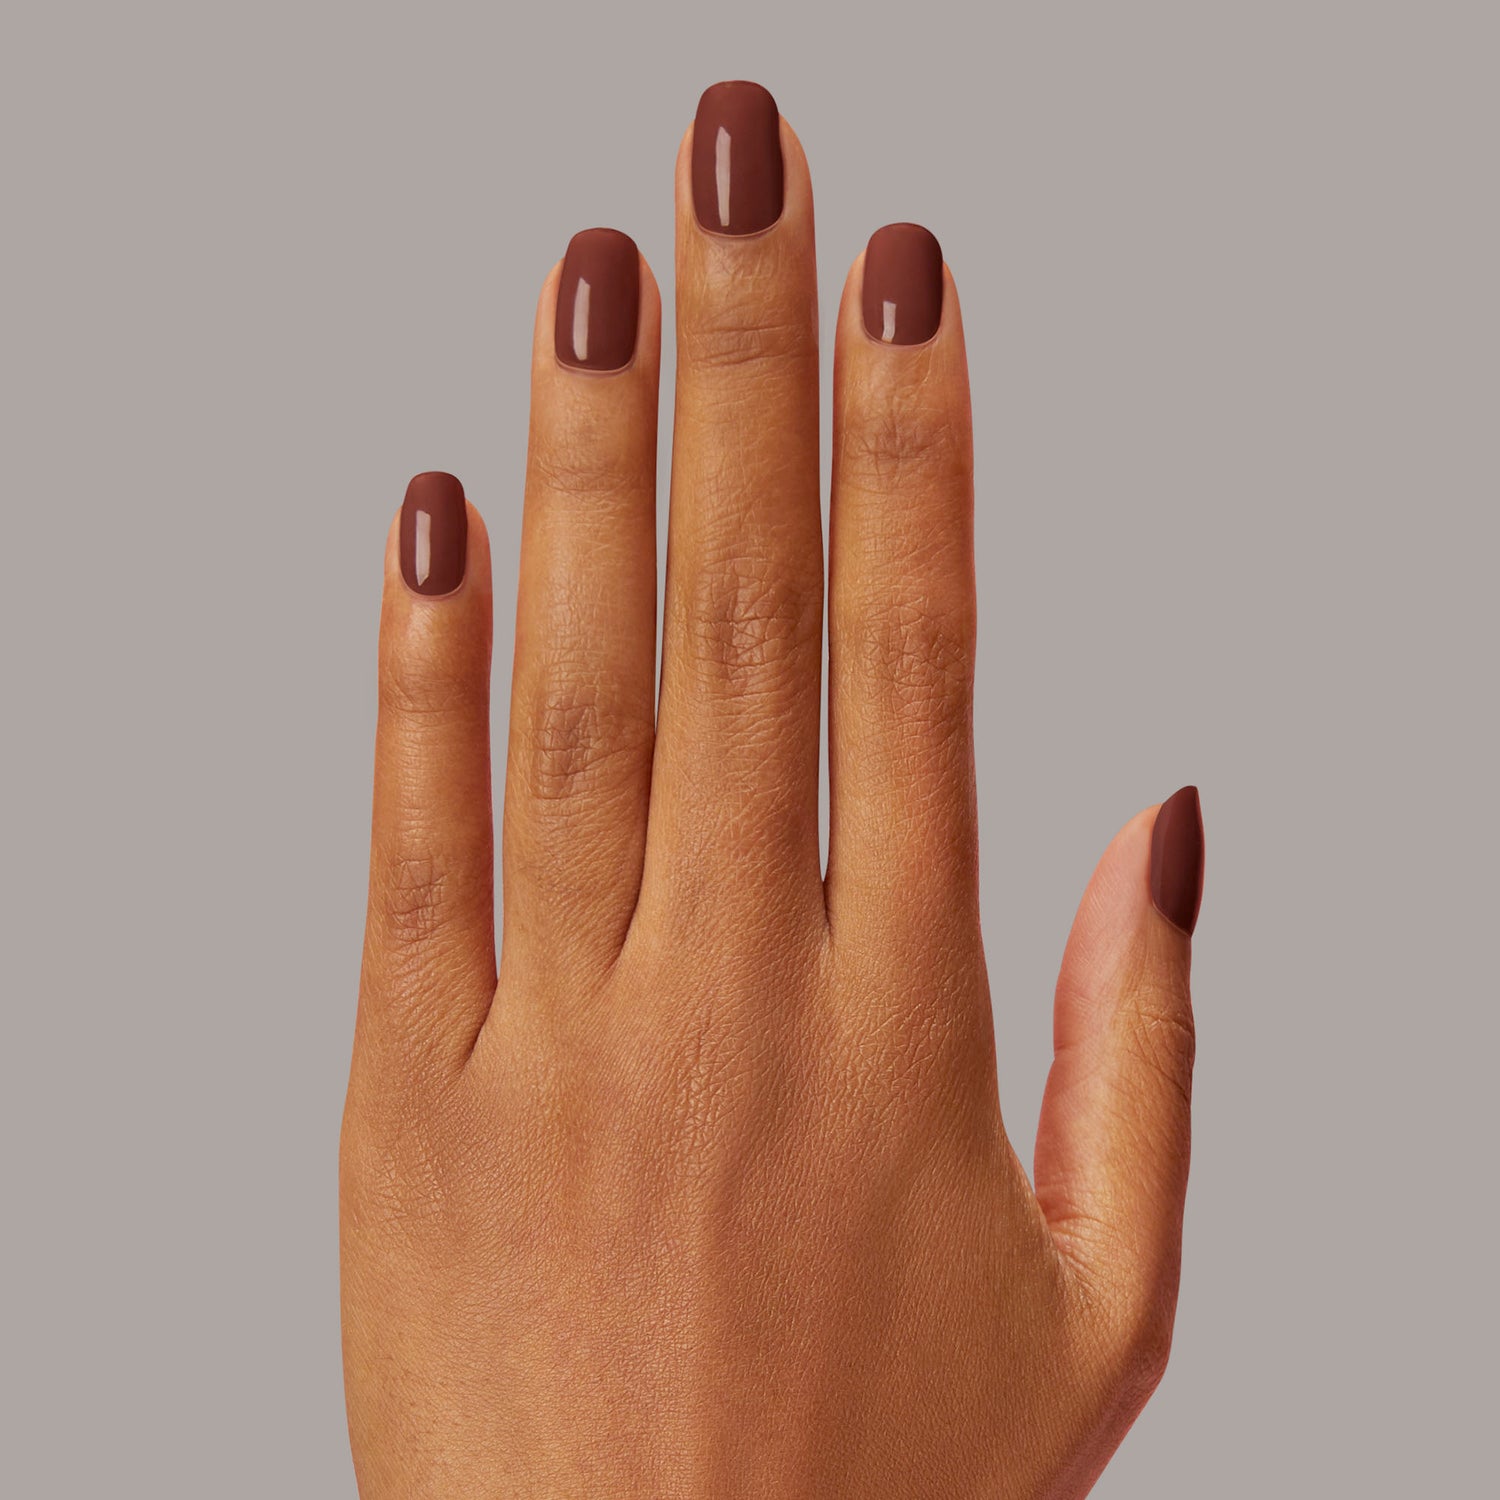 Semi-cured, warm, dark brown gel nail strips with mega volume & an opaque finish.